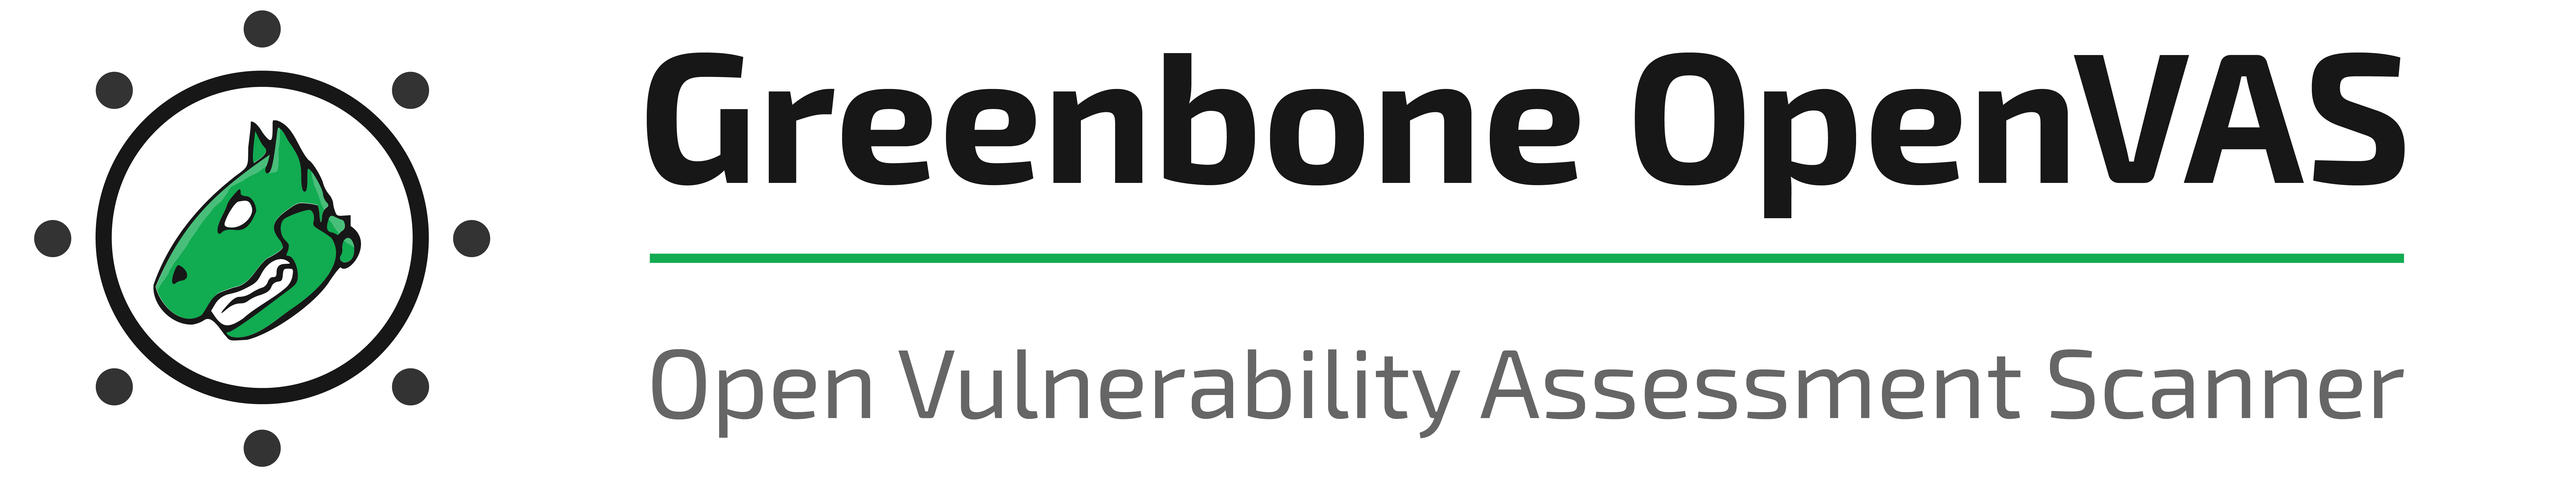 Logo greenbone openvas